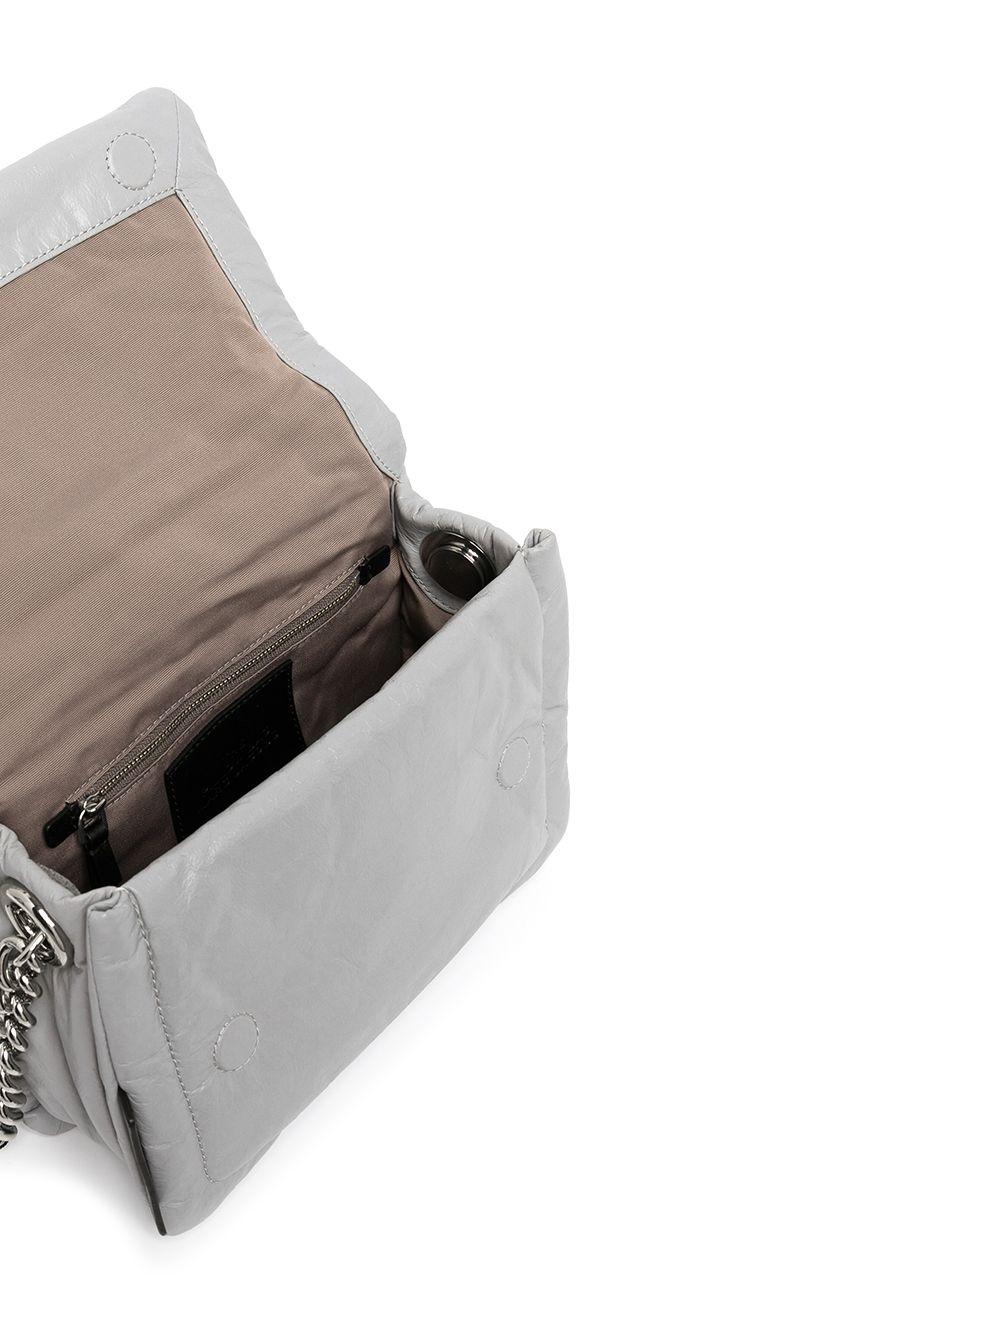 Marc Jacobs The Mini Cushion Bag in Brown